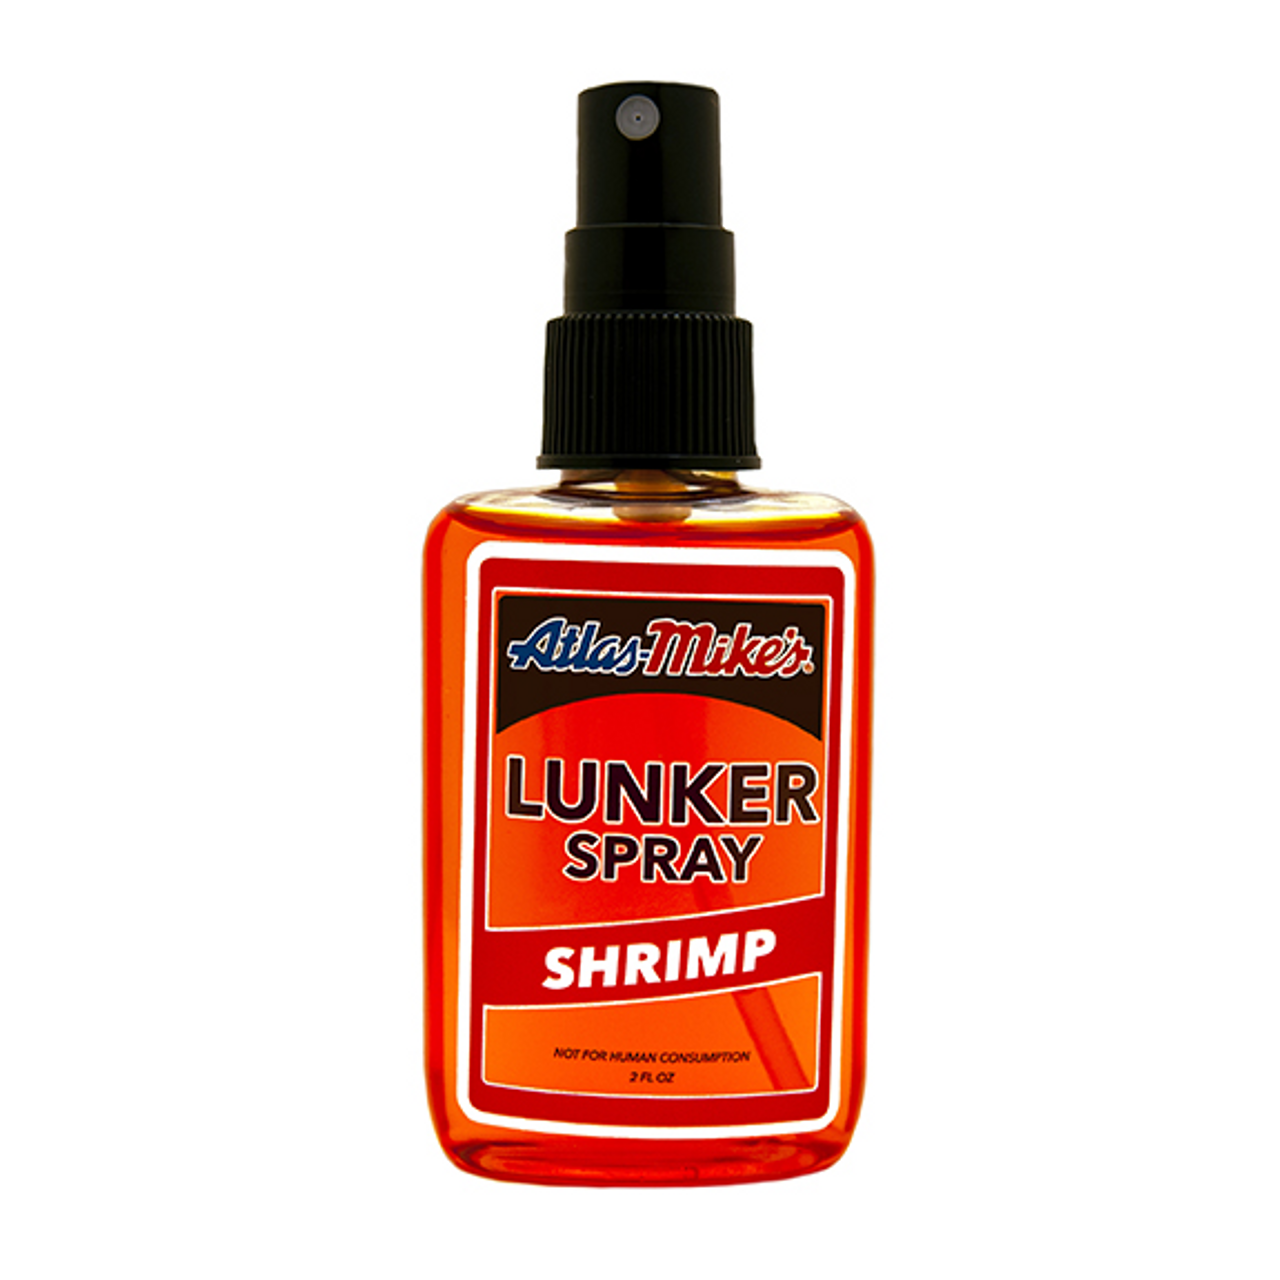 Atlas Mike's Lunker Spray, Shrimp, 2 Oz